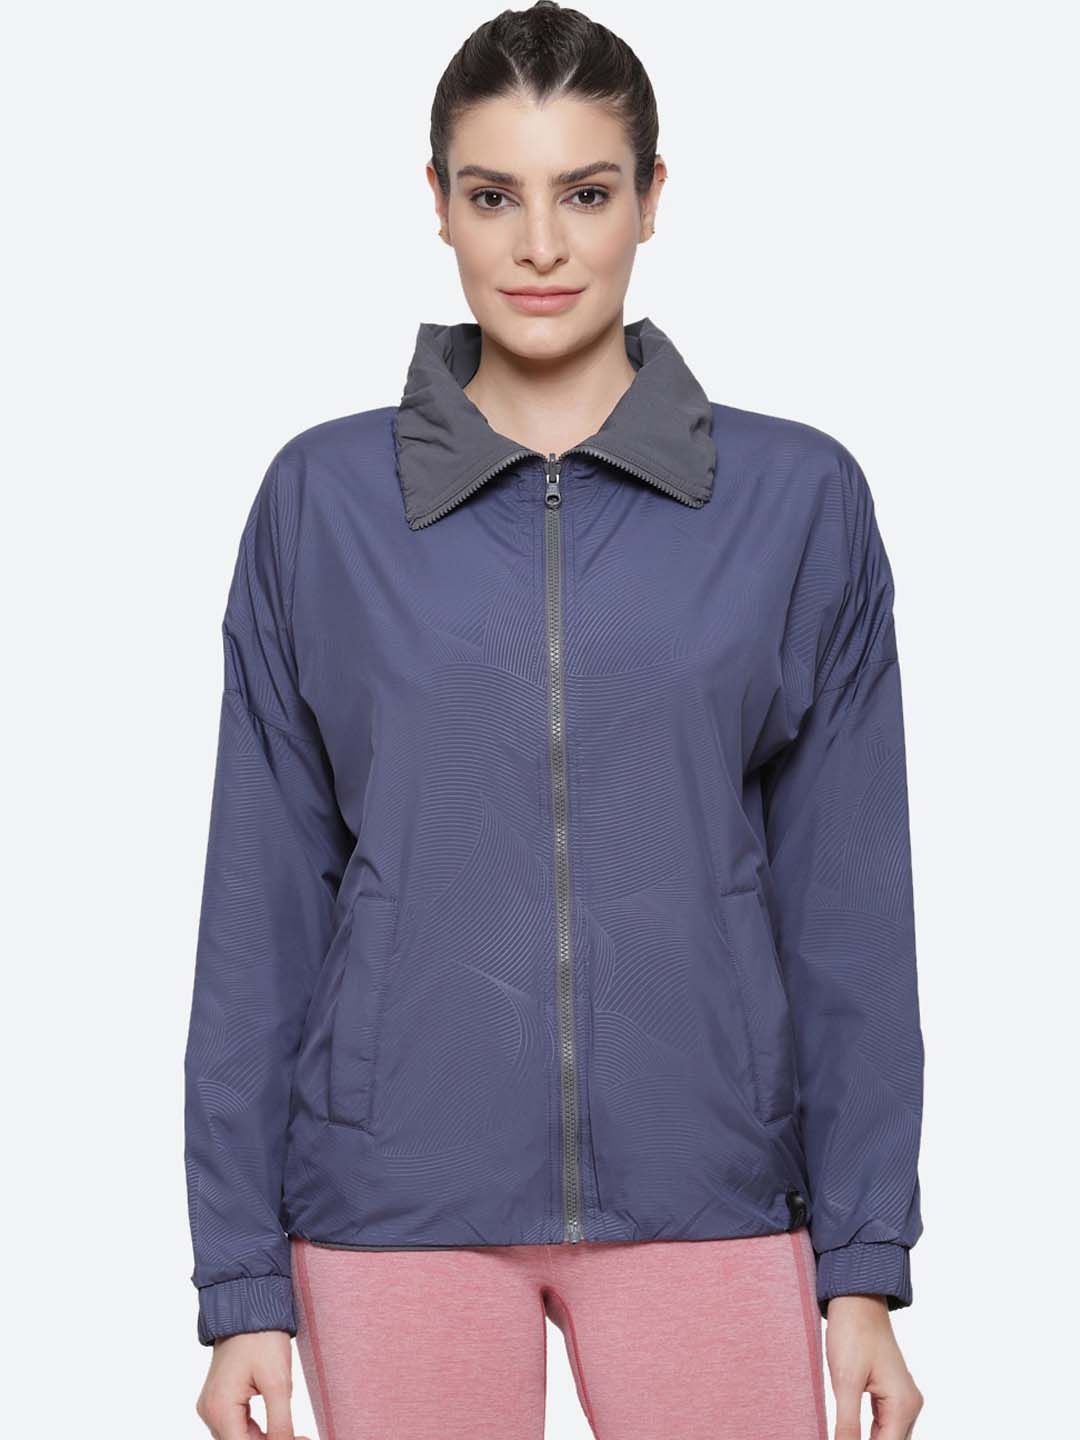 ASICS Women Blue Nylon Washer Fleece Reversible Jacket Price in India